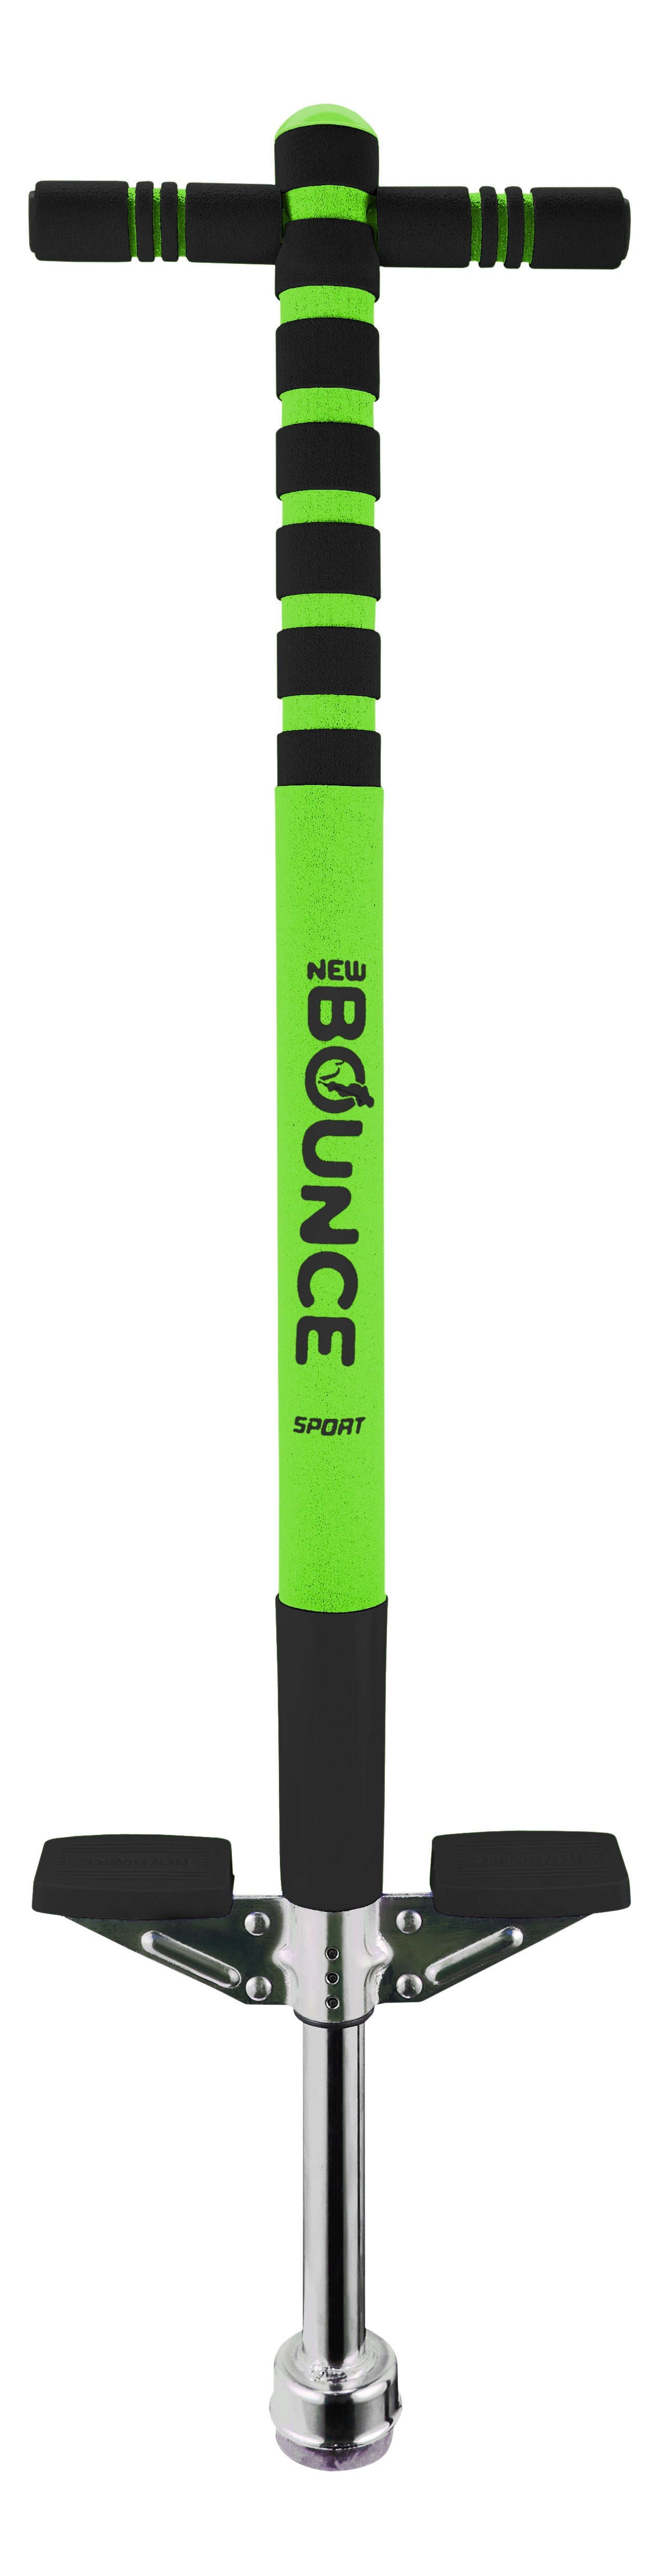 Pogo Stick for Kids – New Bounce